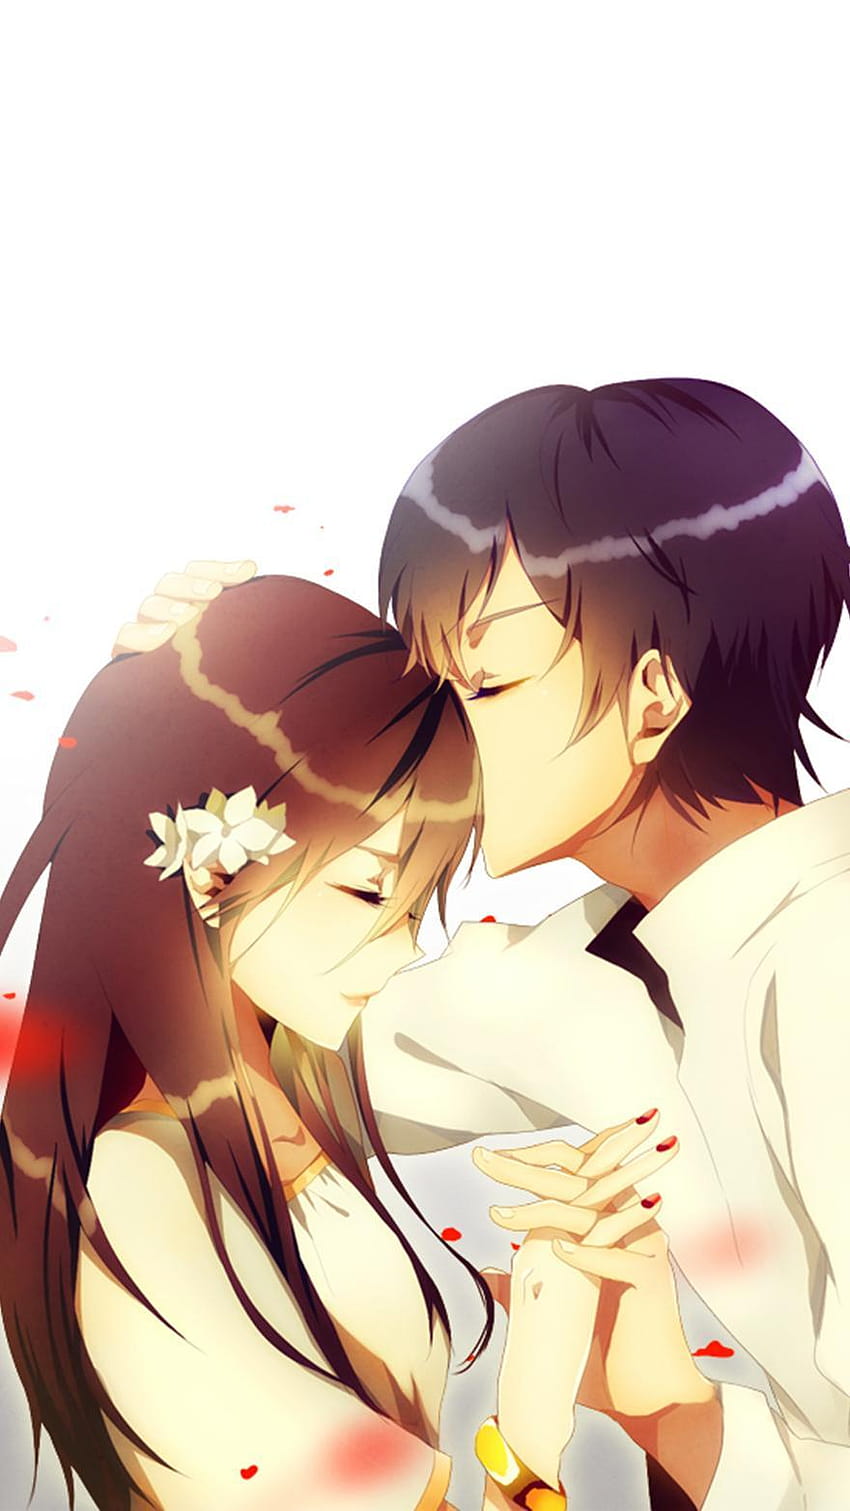 cute gamer couples anime